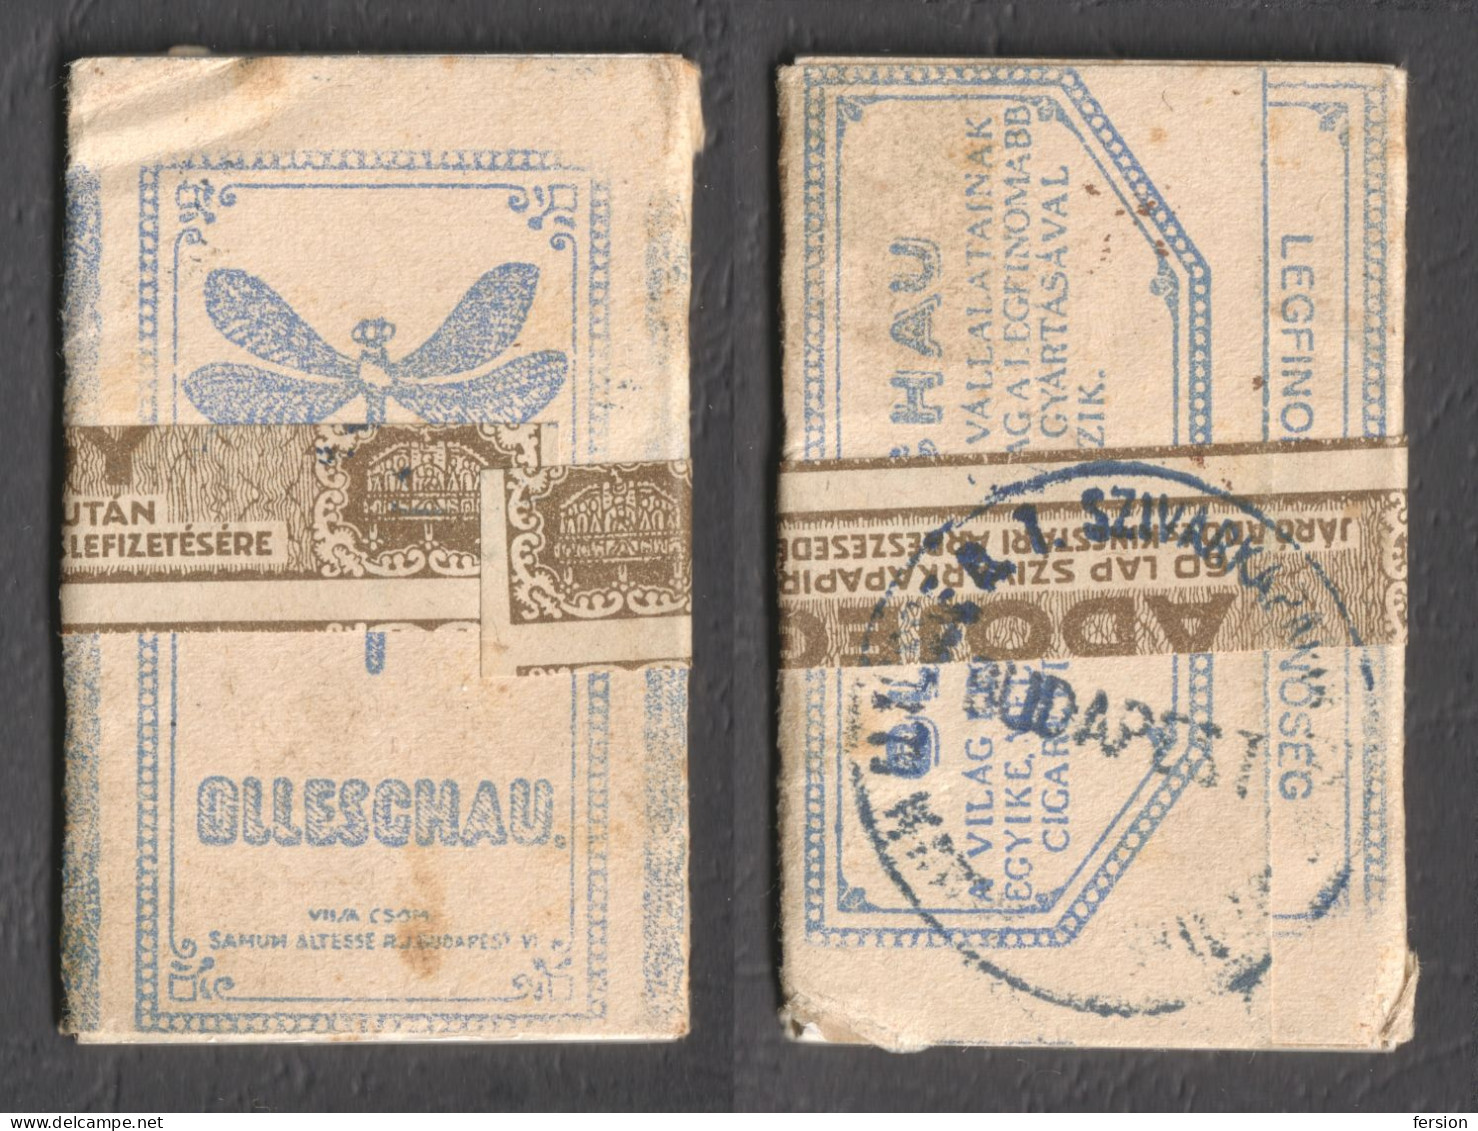 CIGARETTE TOBACCO Paper REVENUE Seal Fiscal Tax Stripe Hungary LABEL Cover Olleschau DRAGONFLY 1930 UNUSED Full Paper - Tobacco